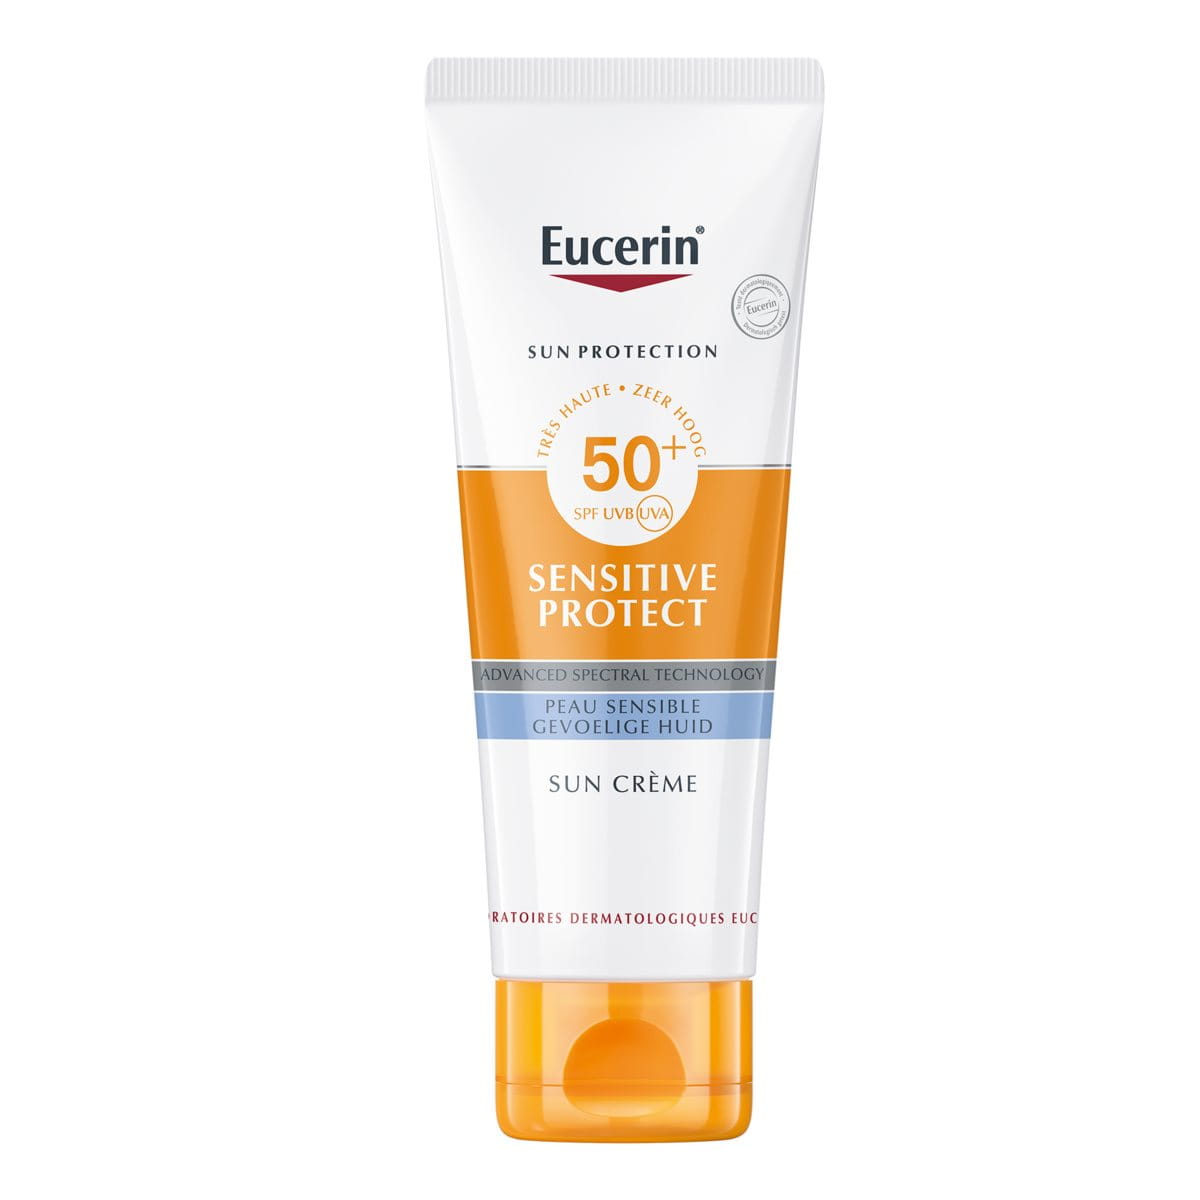 Eucerin SUN PROTECTION SENSITIVE PROTECT Crème SPF 50+ - 50ml